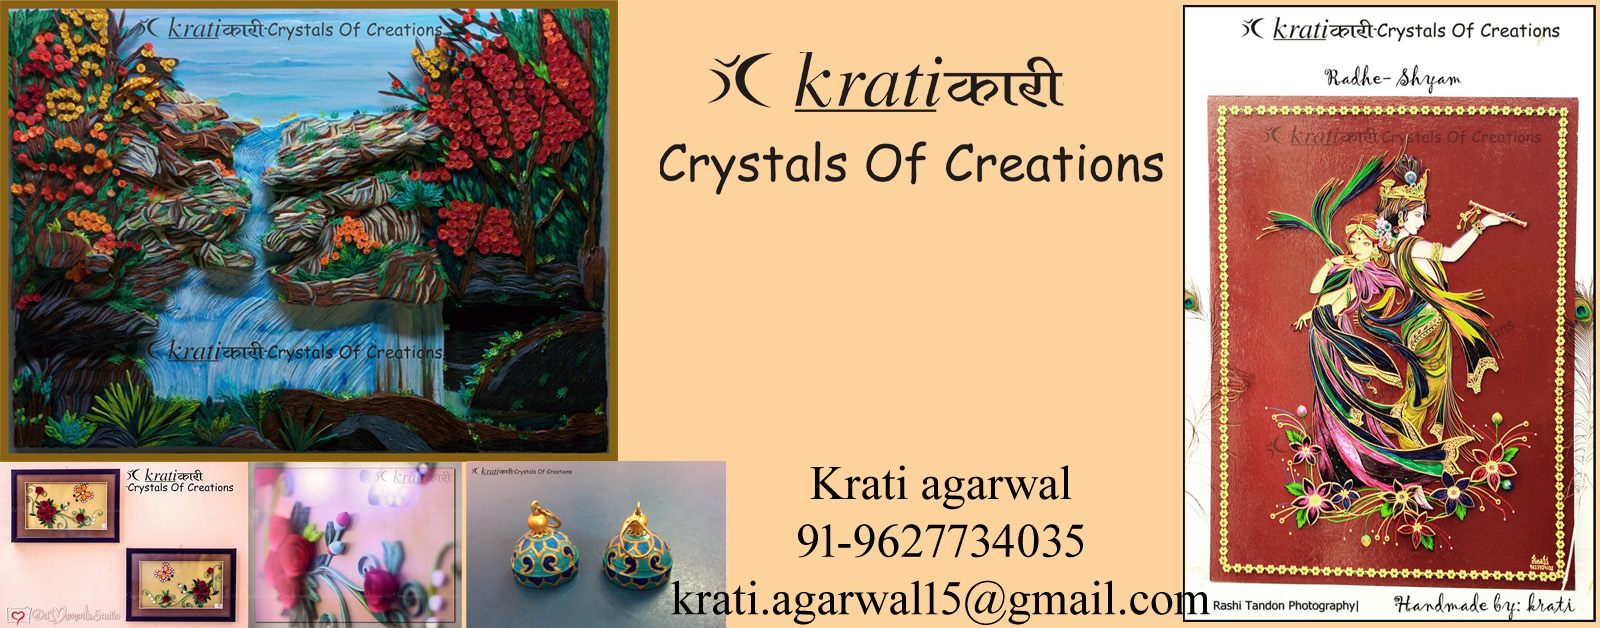 Kratikari- Crystals of Creations